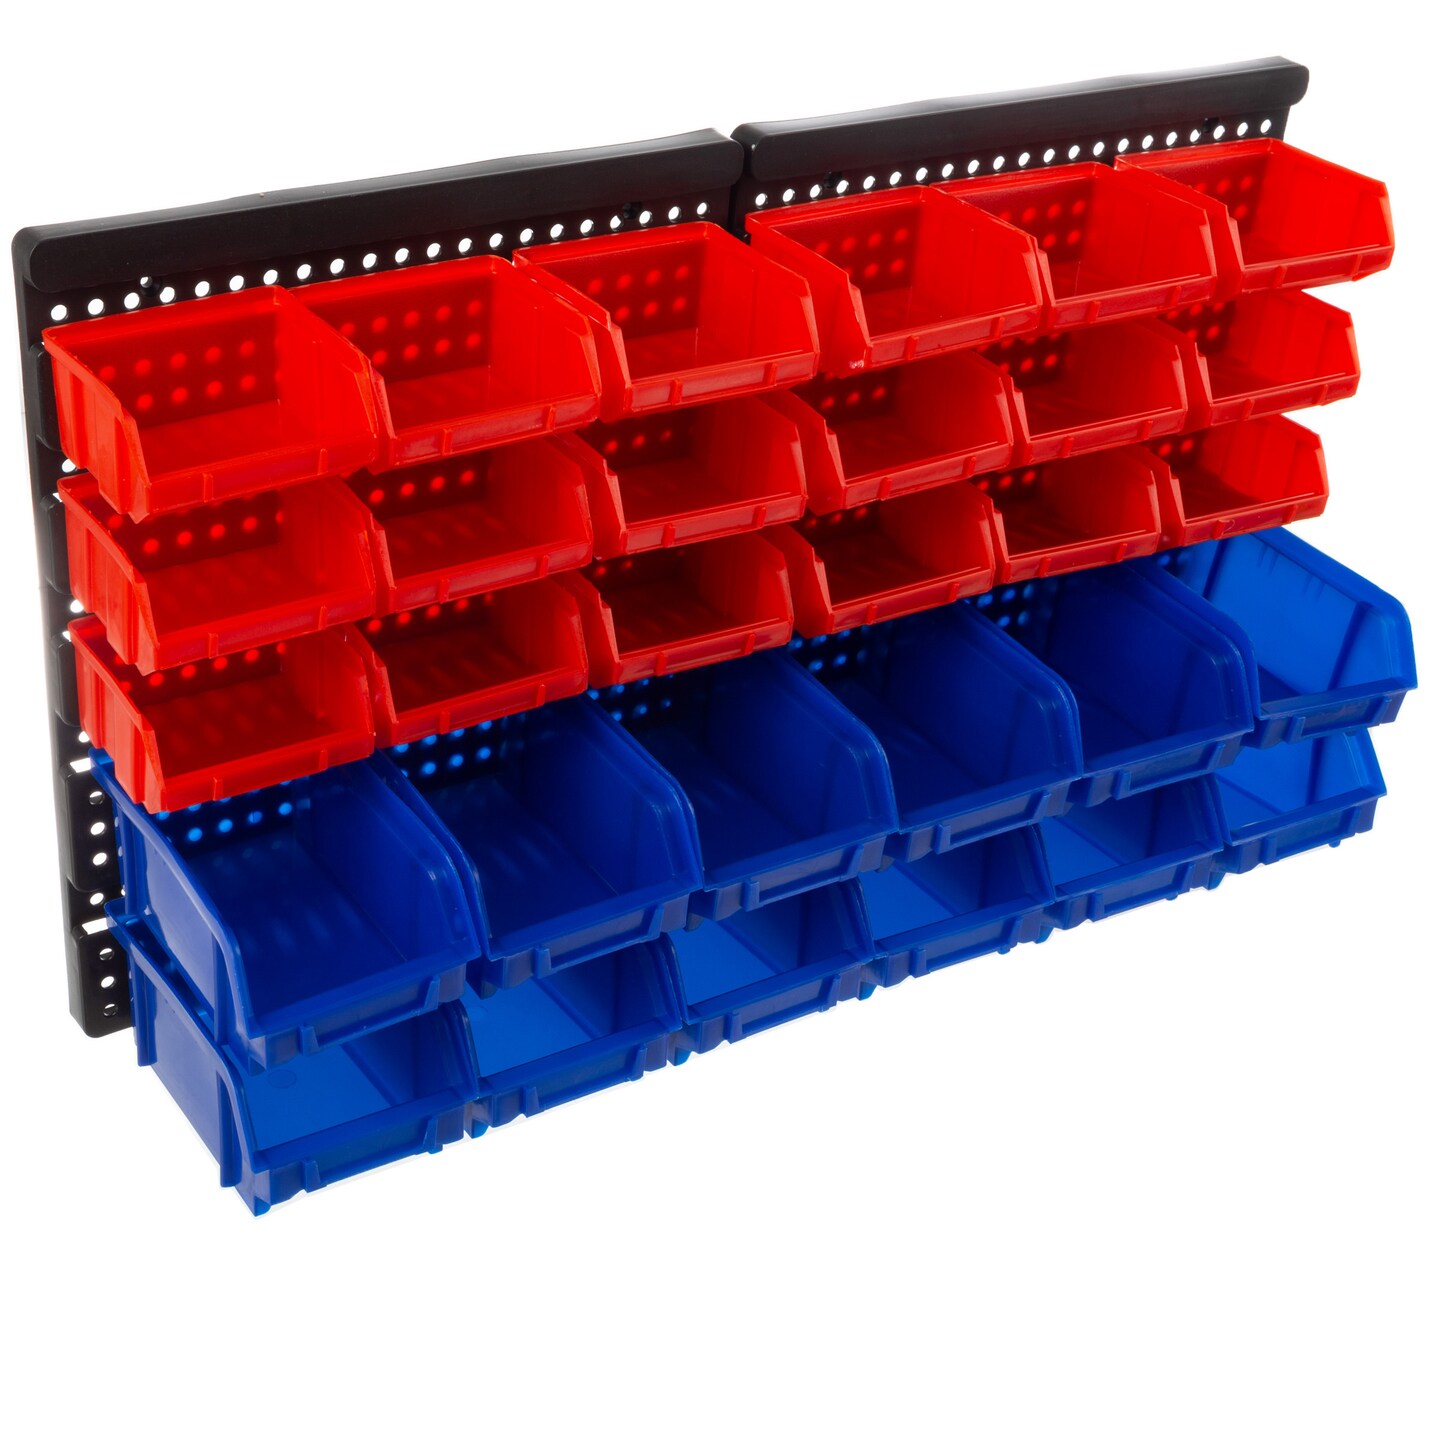 Stalwart Wall-Mounted Garage Storage Bins - Compartments for Garage Organization Craft Supply Storage Tool Box Organizer Unit